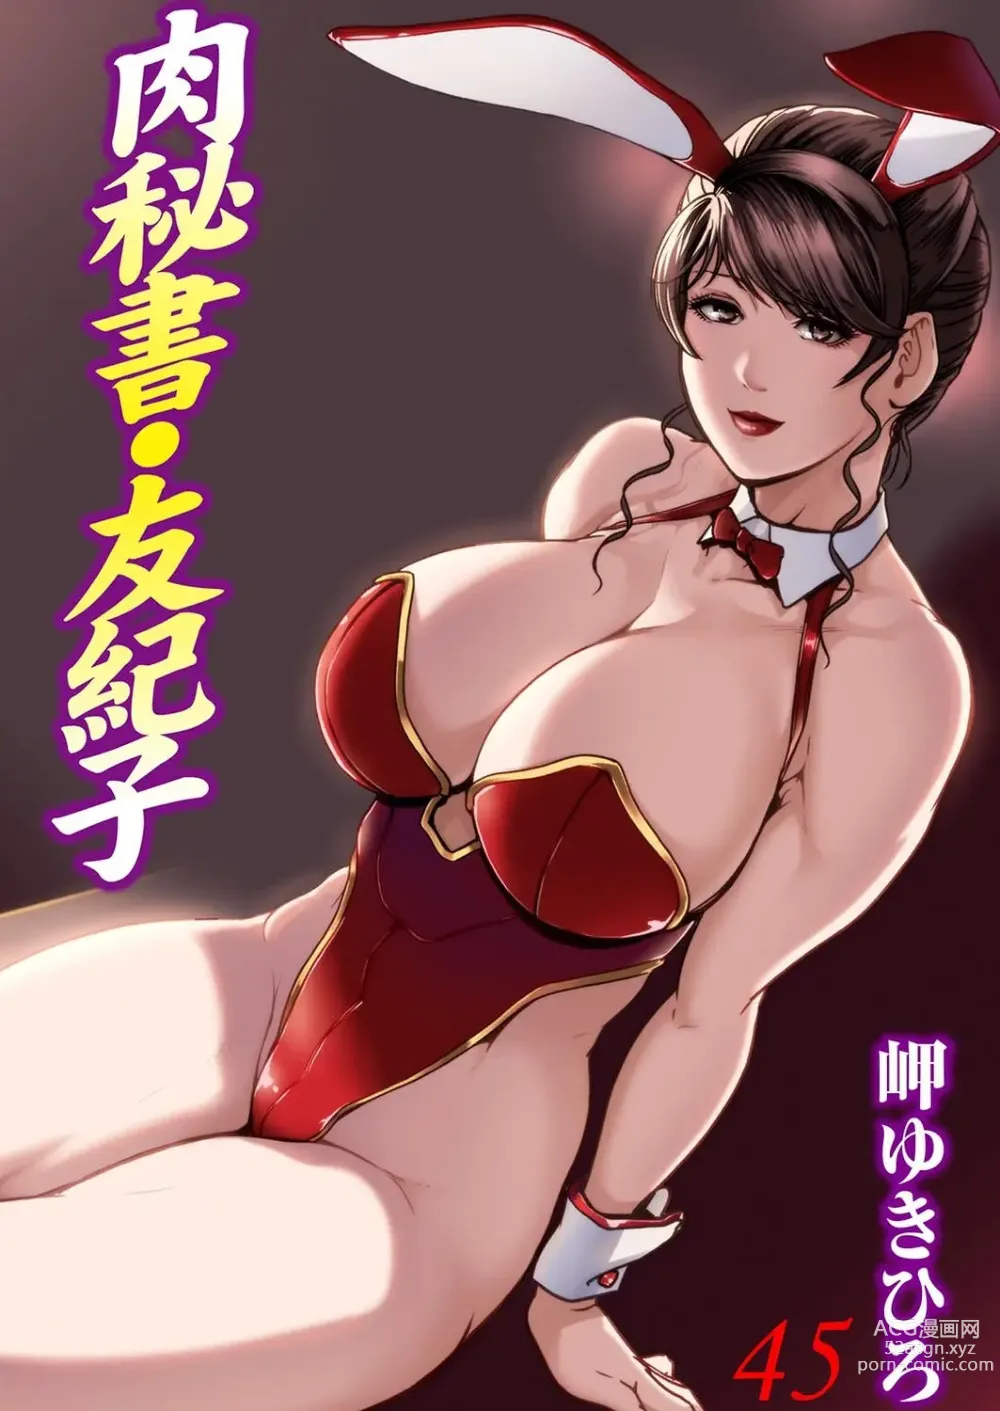 Page 1 of manga Nikuhisyo Yukiko VOL.45